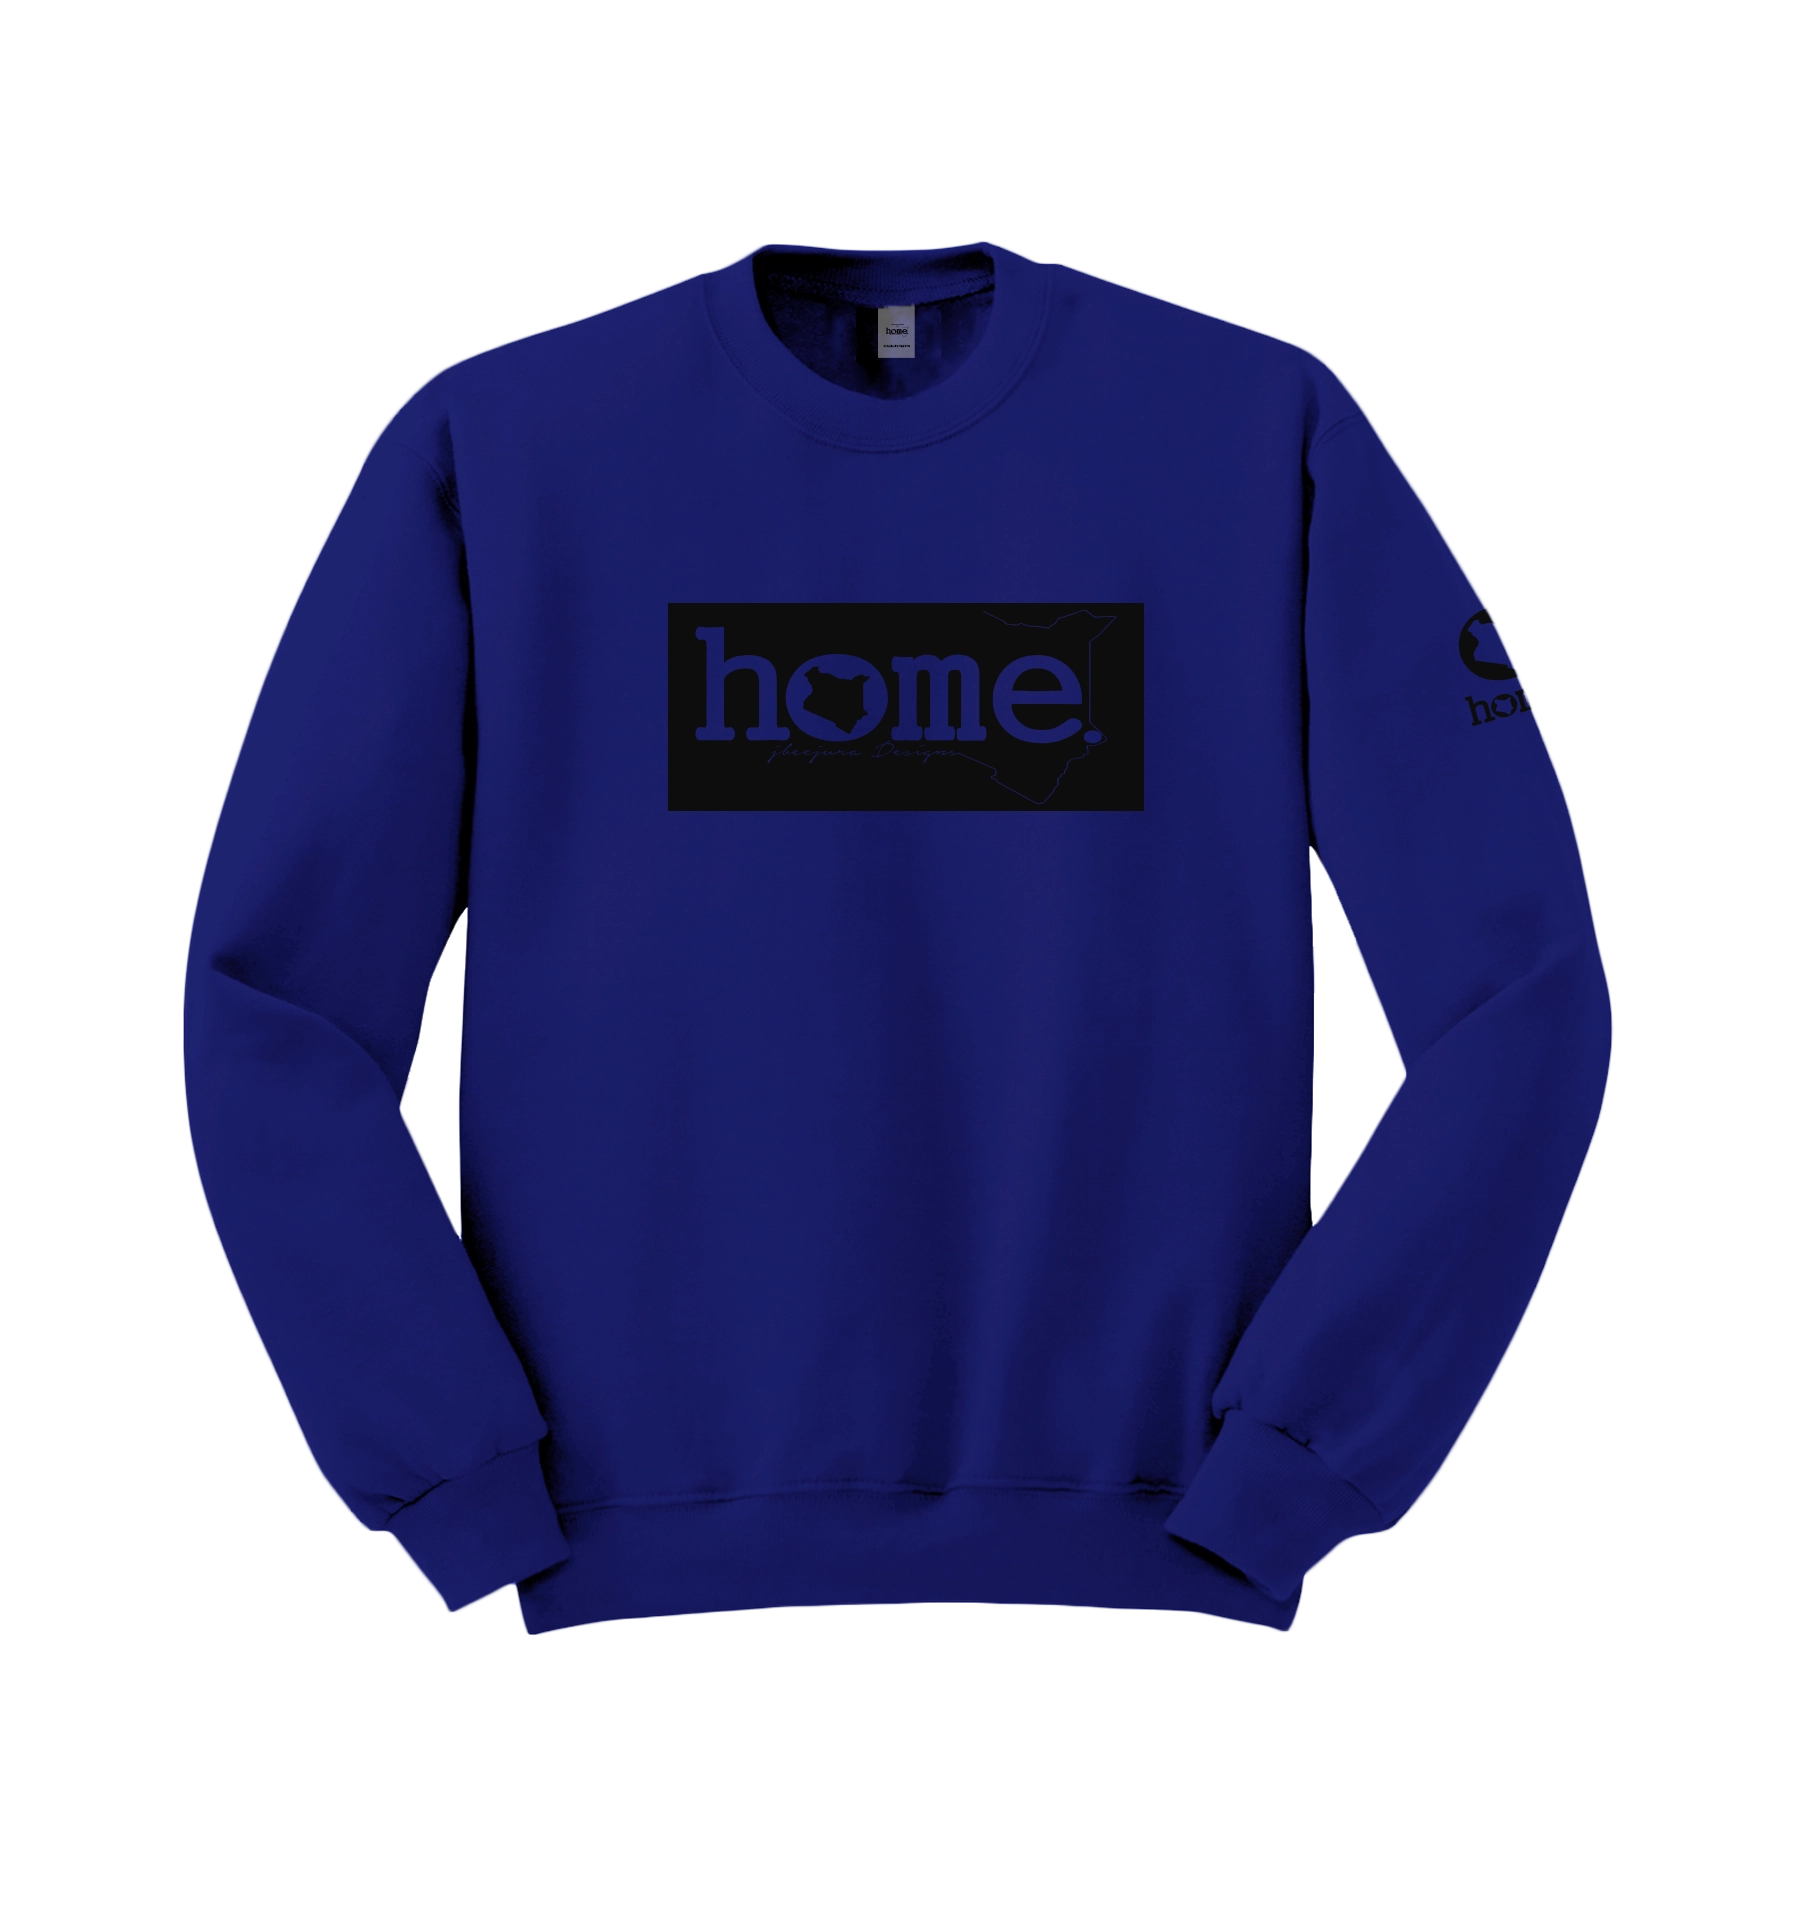 home_254 ROYAL BLUE SWEATSHIRT (HEAVY FABRIC) WITH A BLACK CLASSIC PRINT